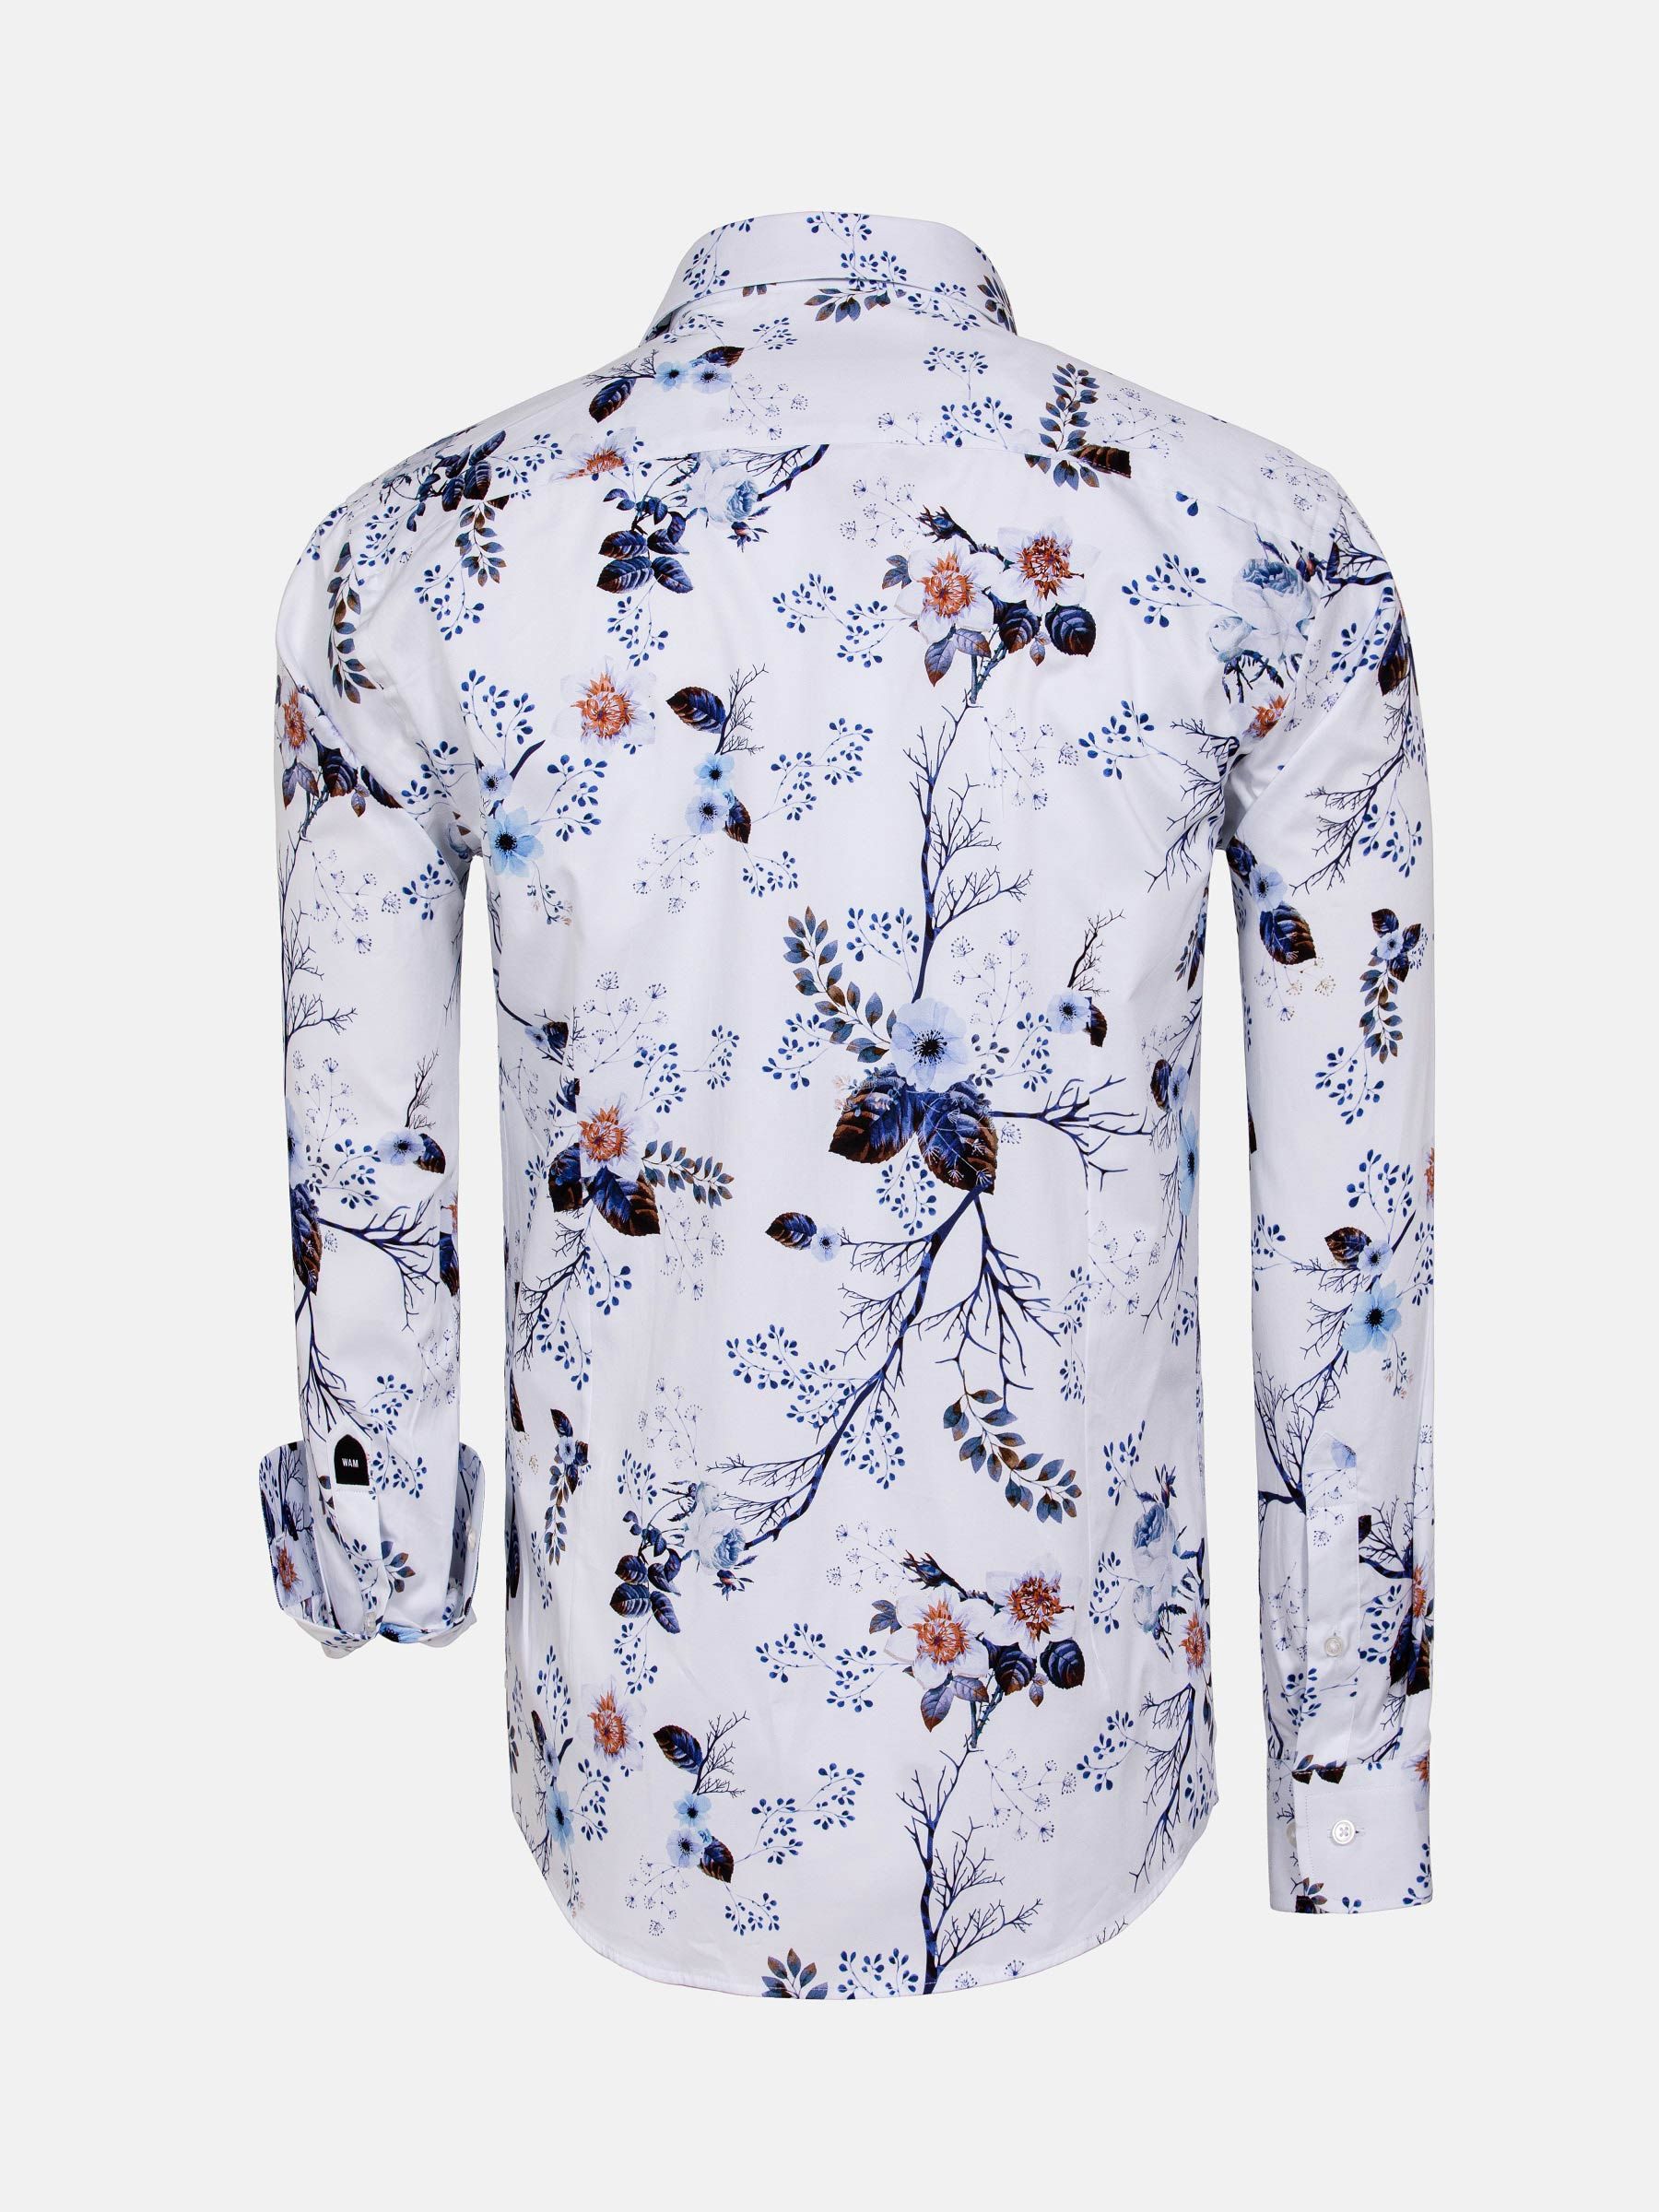 Men's floral shirt- Floral pattern men's shirt- Men's long sleeve